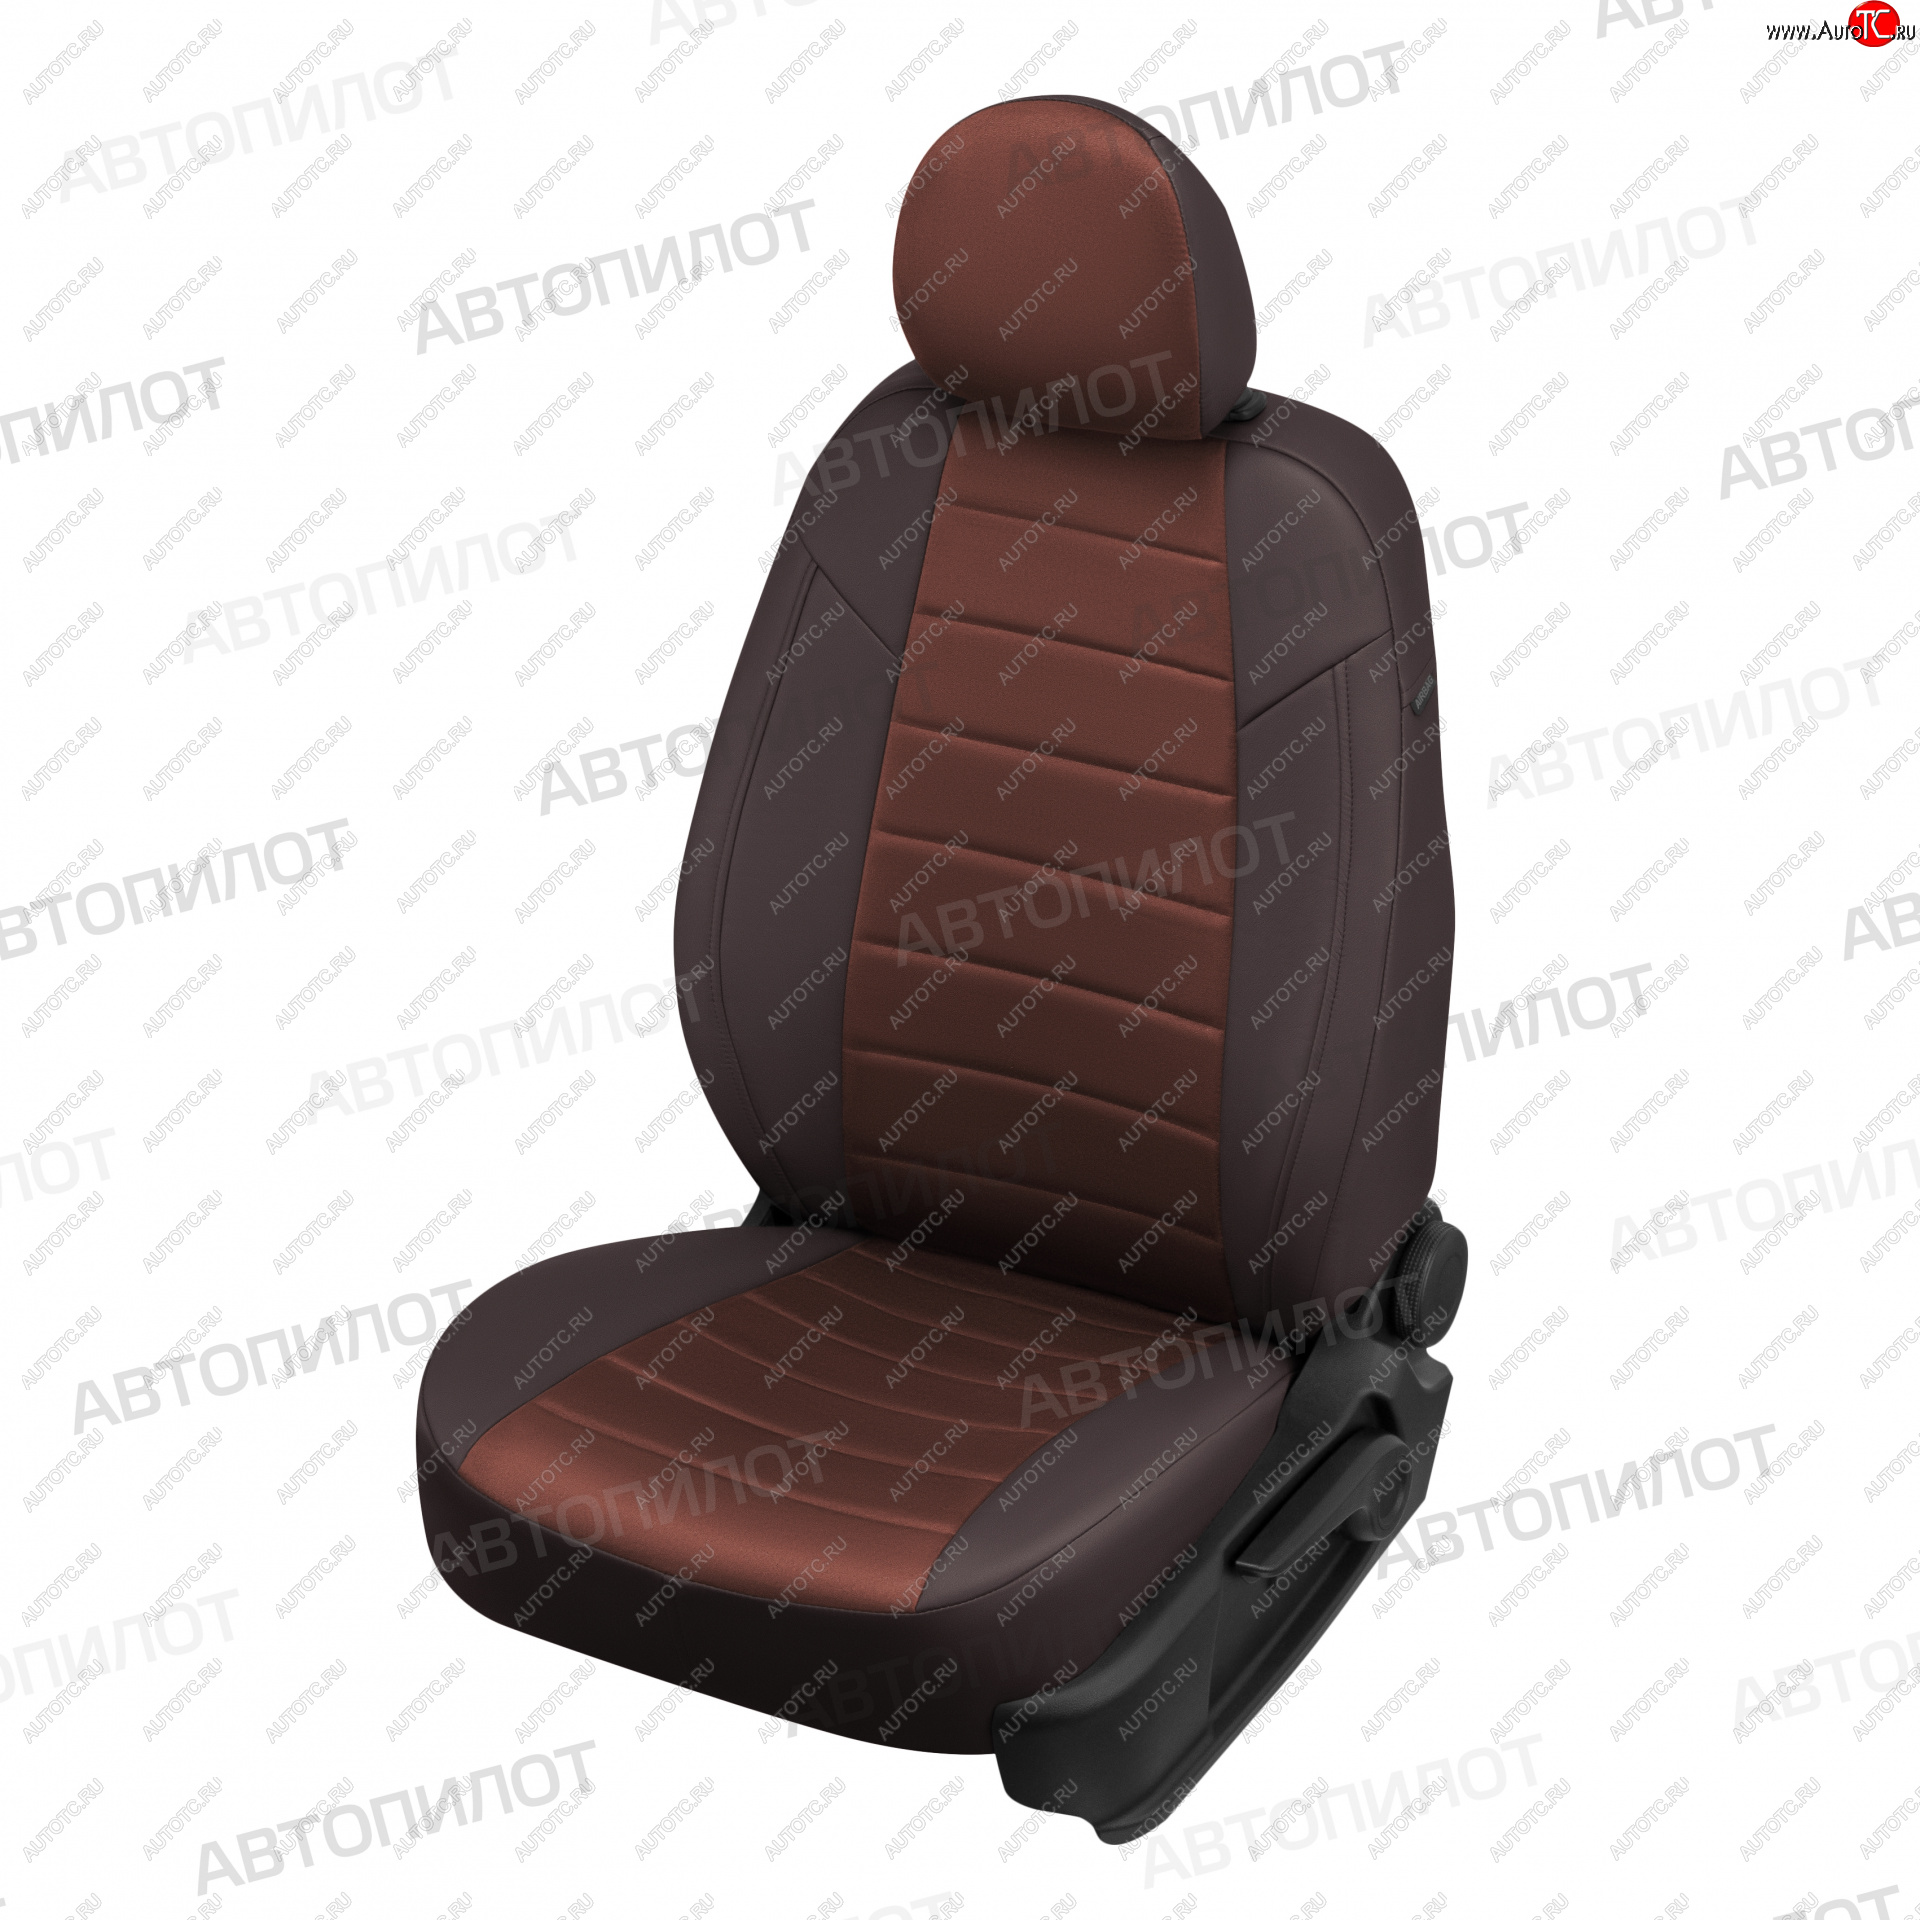 13 449 р. Чехлы сидений (экокожа/алькантара) Автопилот  Ford C-max  Mk1 (2003-2010) (шоколад)